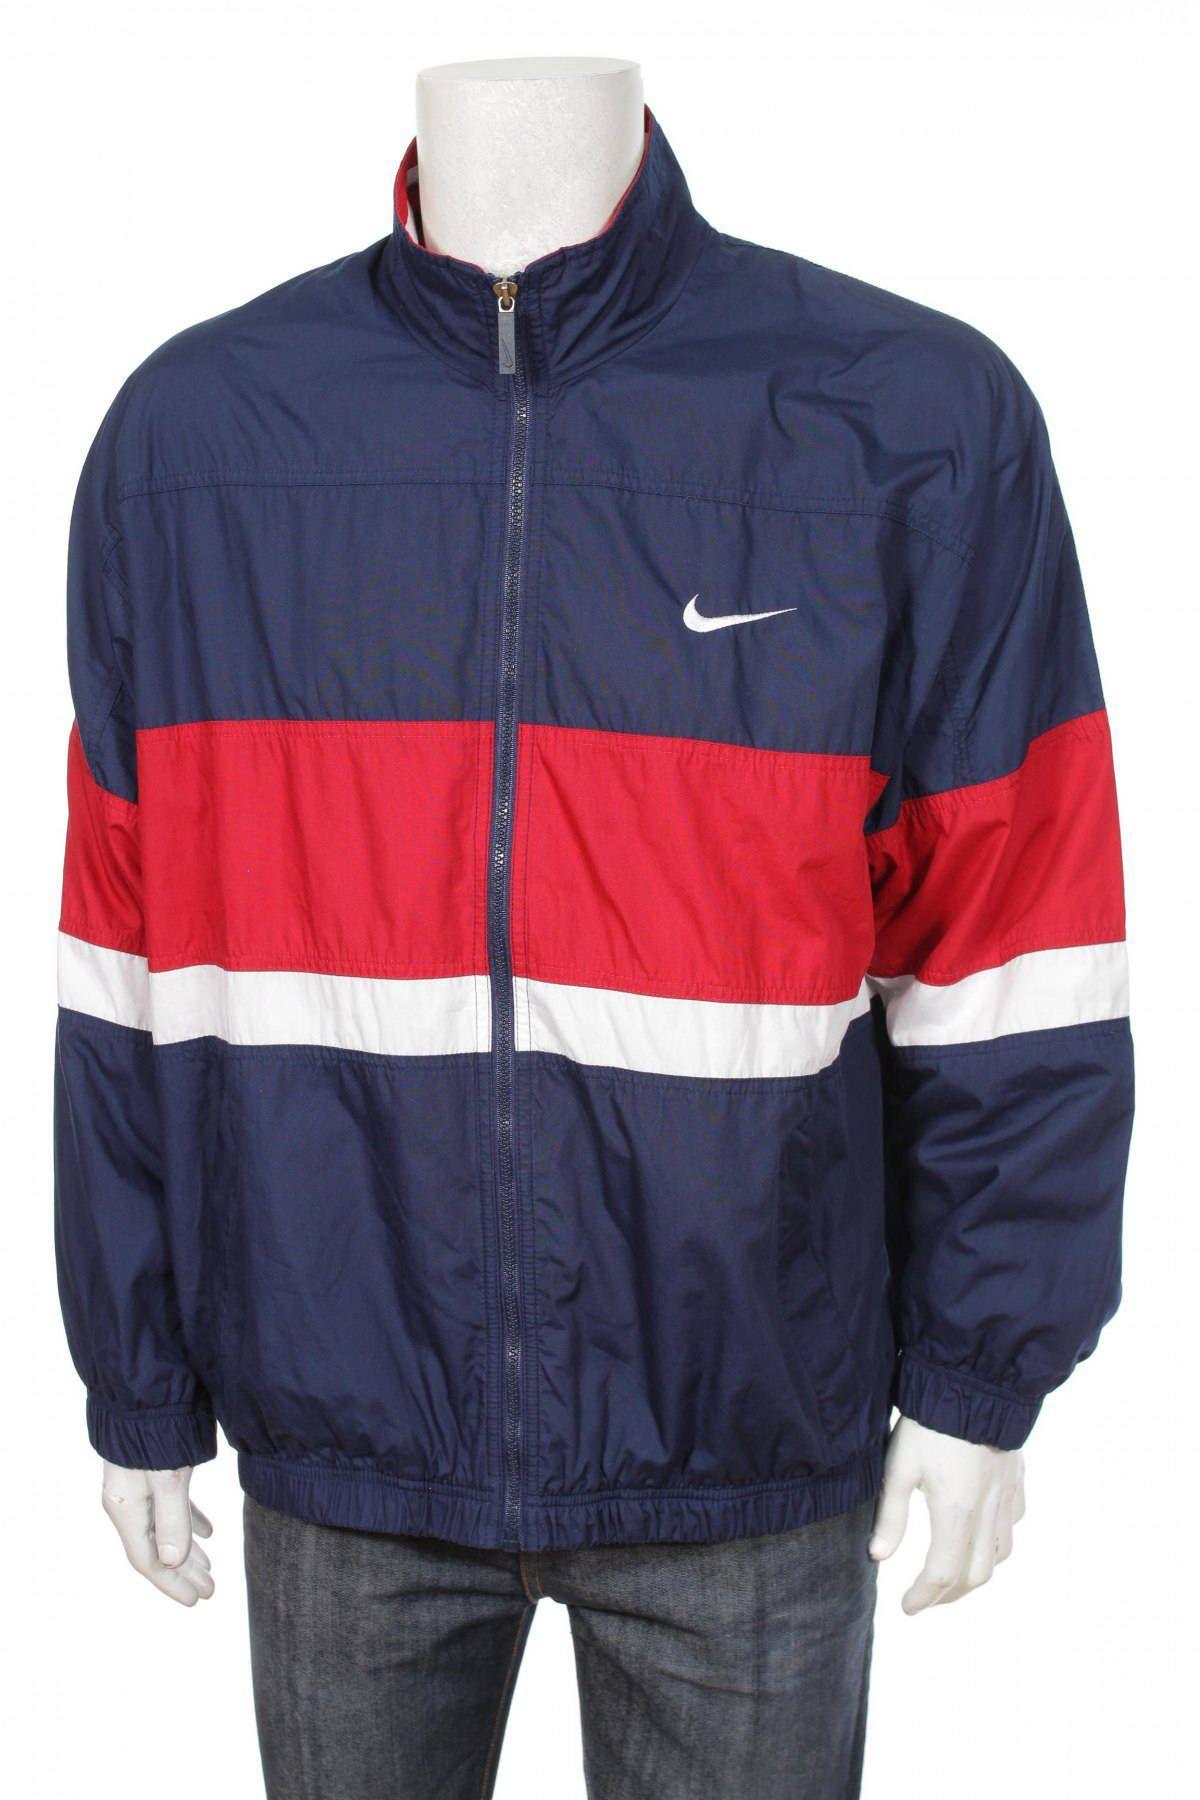 Red White Blue Nike Logo - Vintage 90s Nike Windbreaker jacket Big Logo Spell Out Navy Blue/Red ...